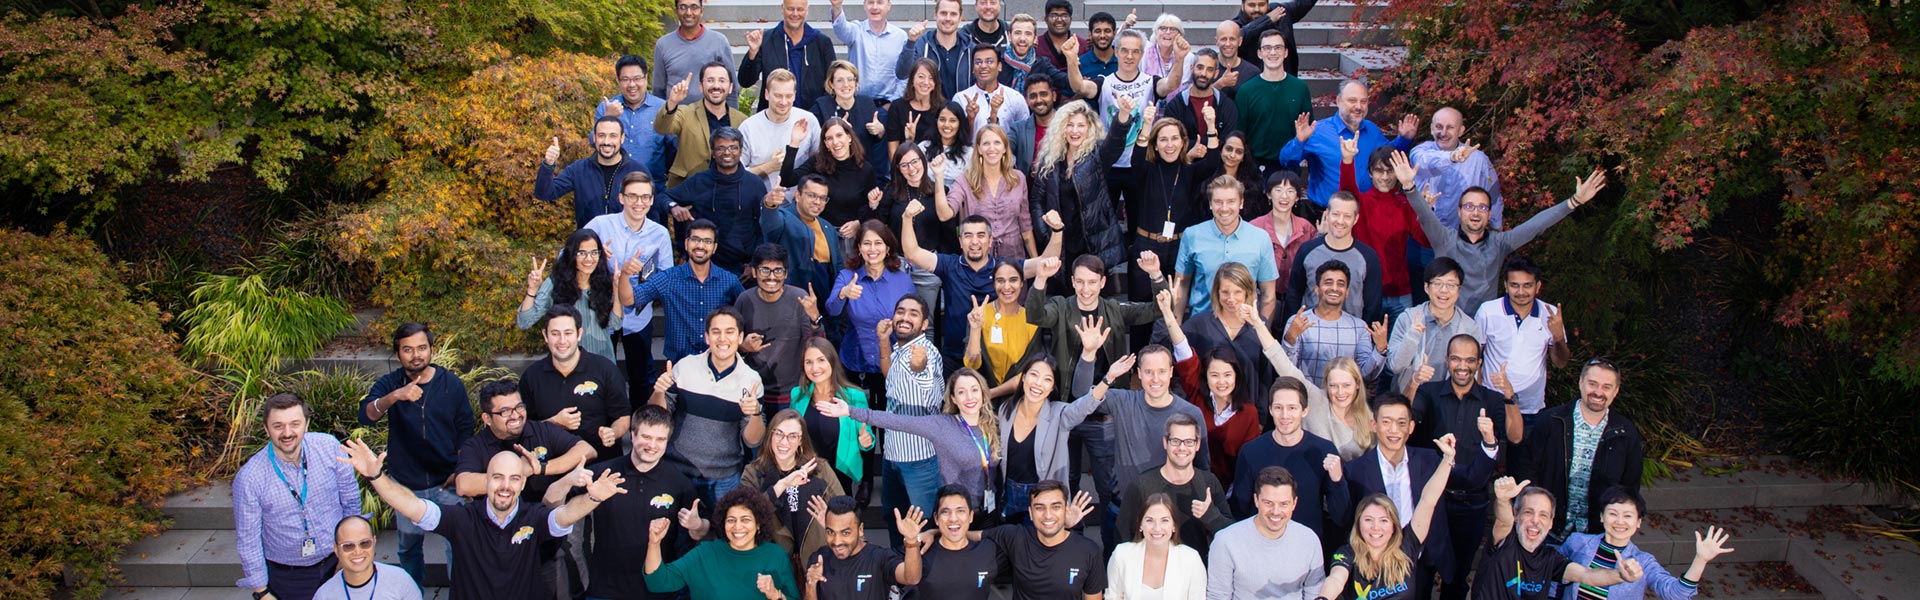 Group shot of funded internal SAP startups